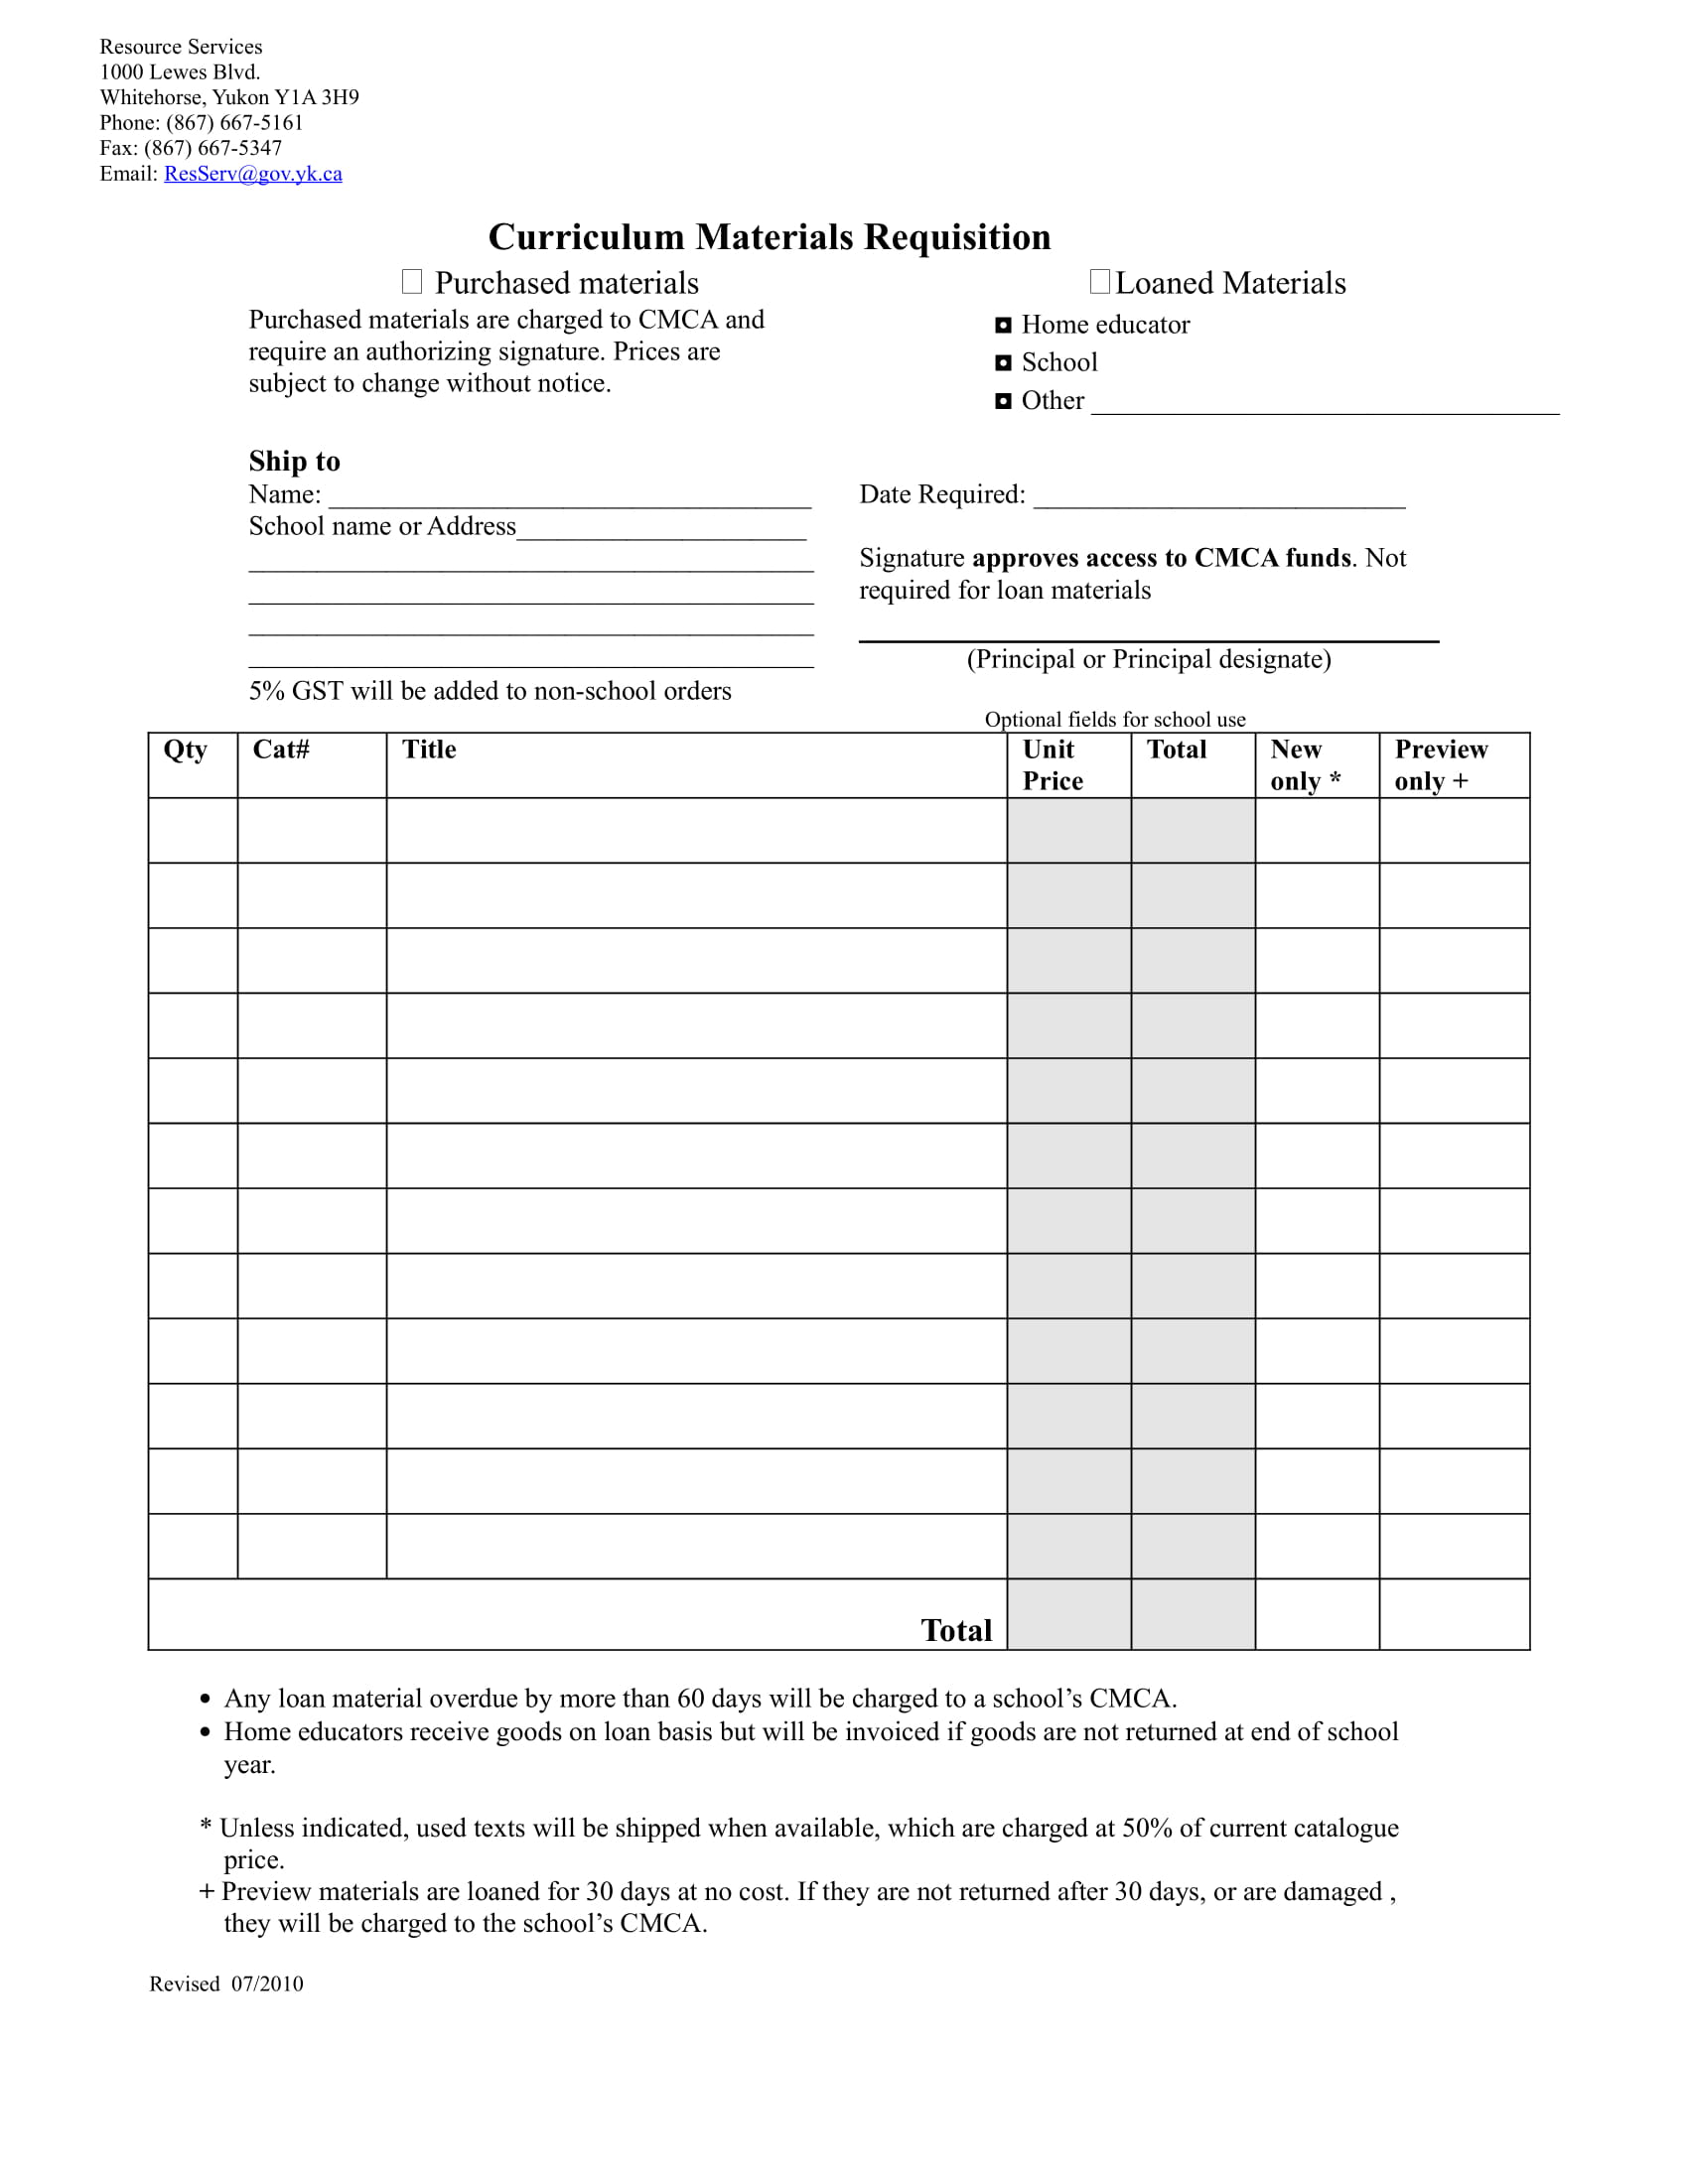 curriculum materials requisition form 1